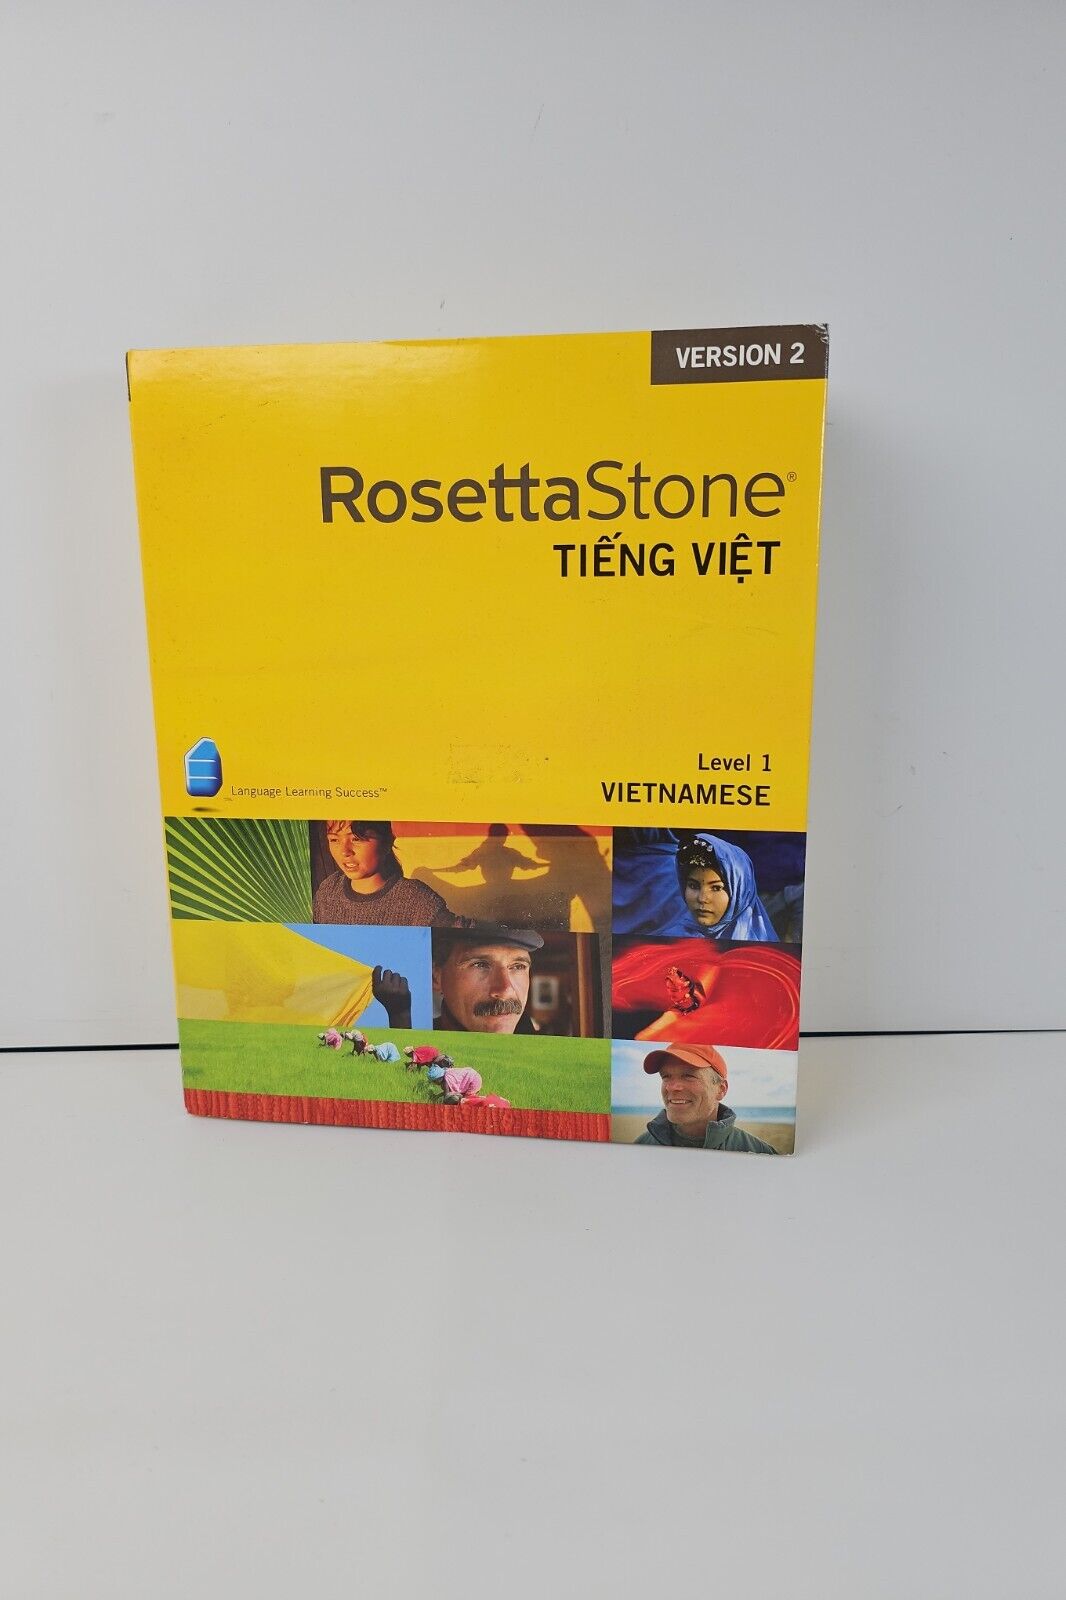 Rosetta Stone Vietnamese Level 1 Version 2 Language Learning System & Headset